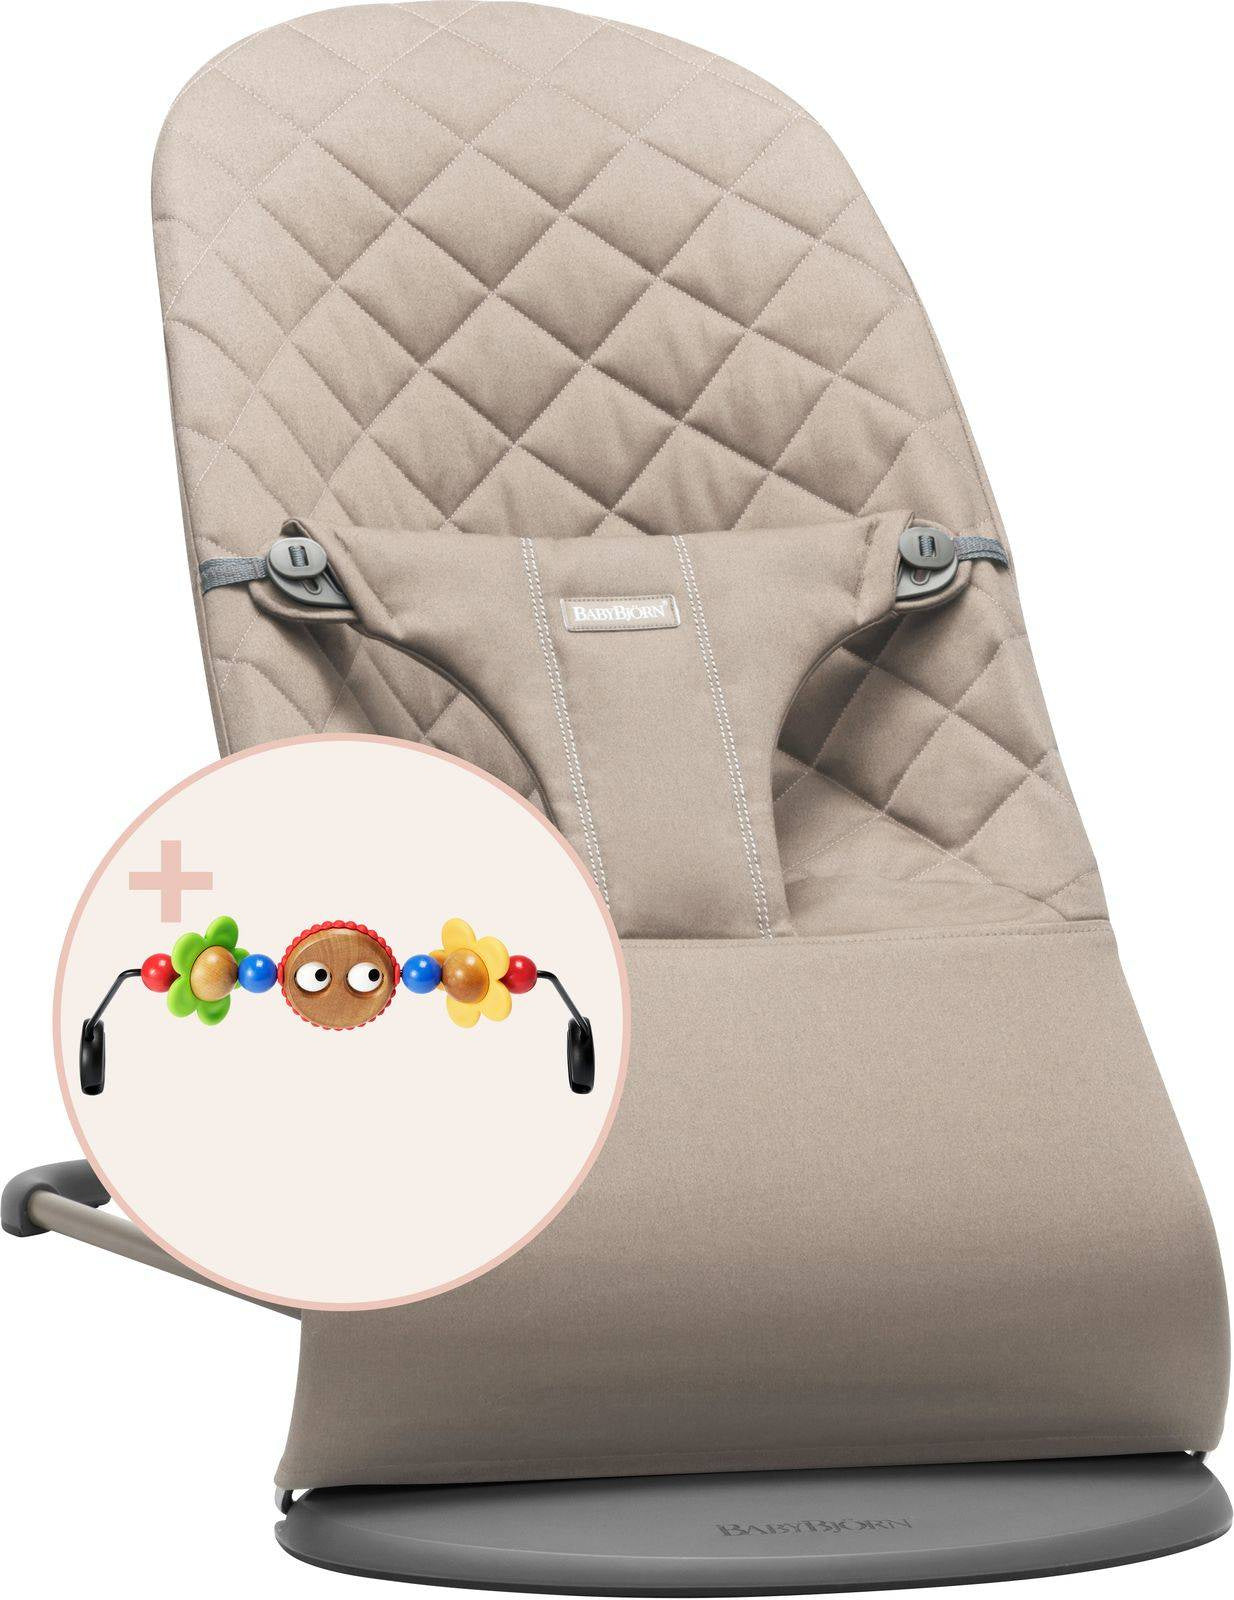 Babybjorn - Bliss Woven deckchair, sandstyars + Googly Eyes toy